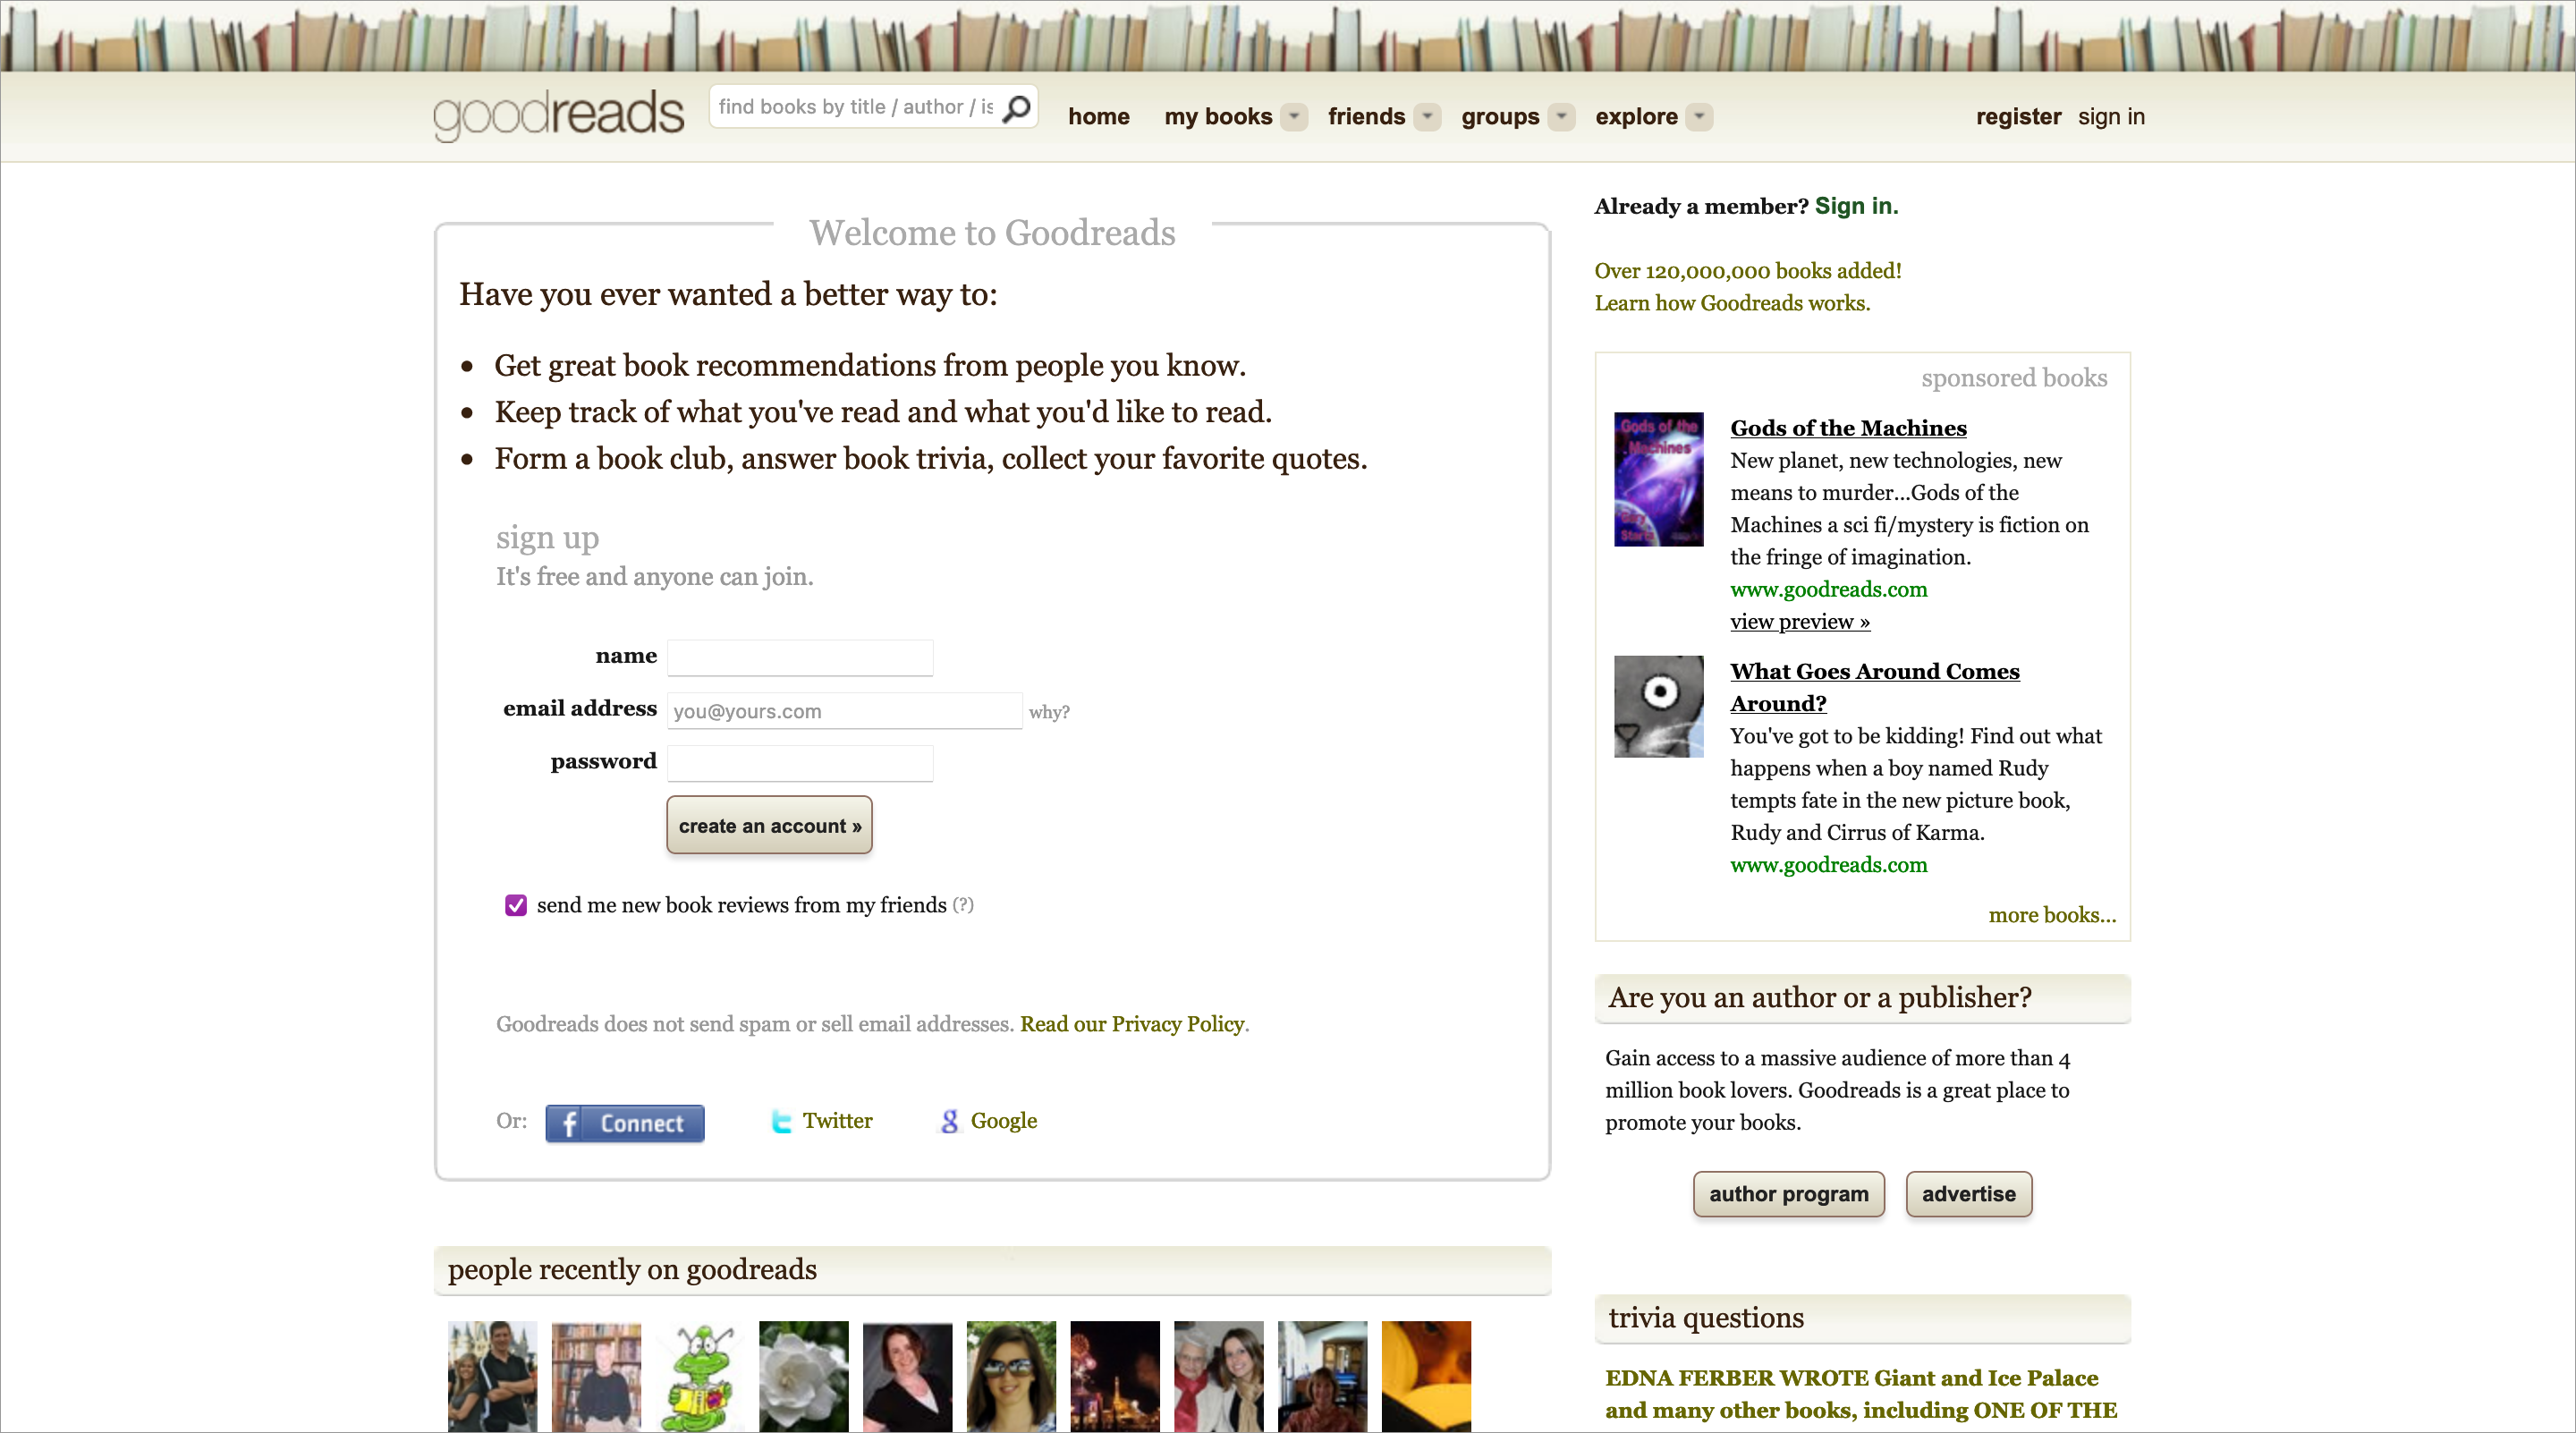 goodreads.com in 2011